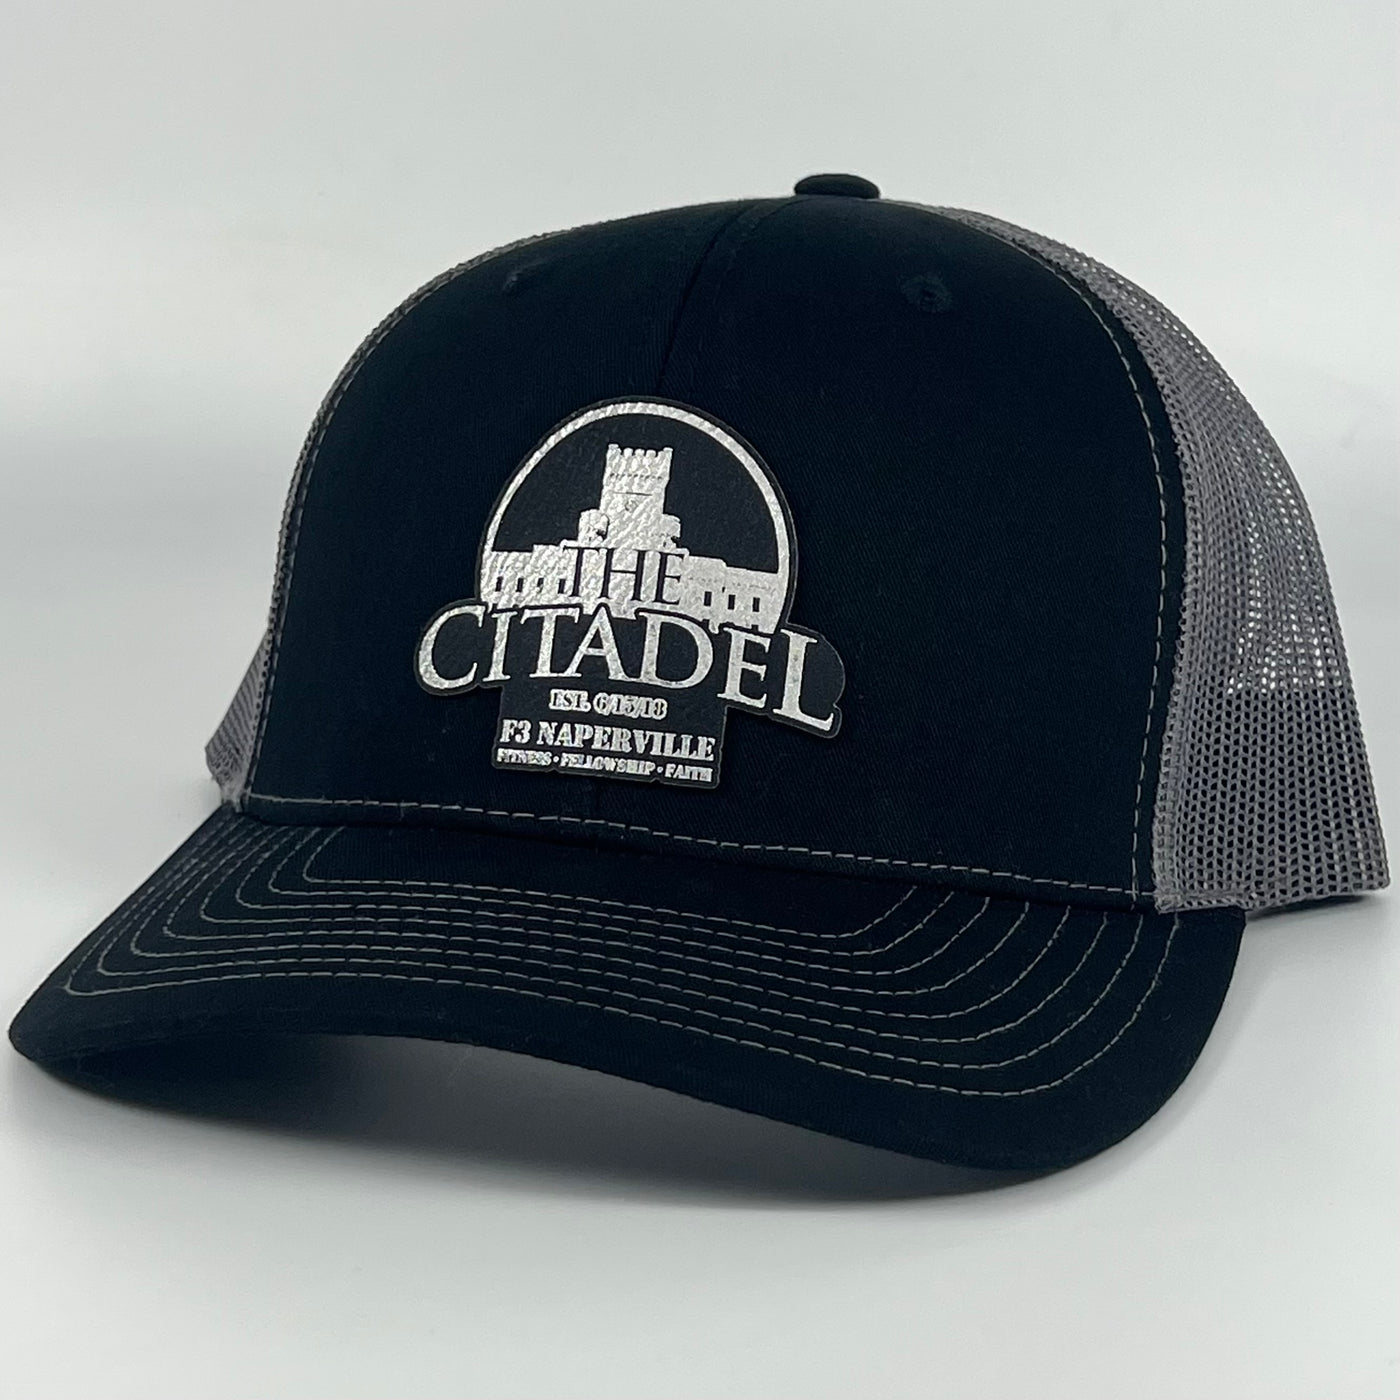 F3 Naperville The Citadel Leatherette Patch Hat Pre-Order October 2022